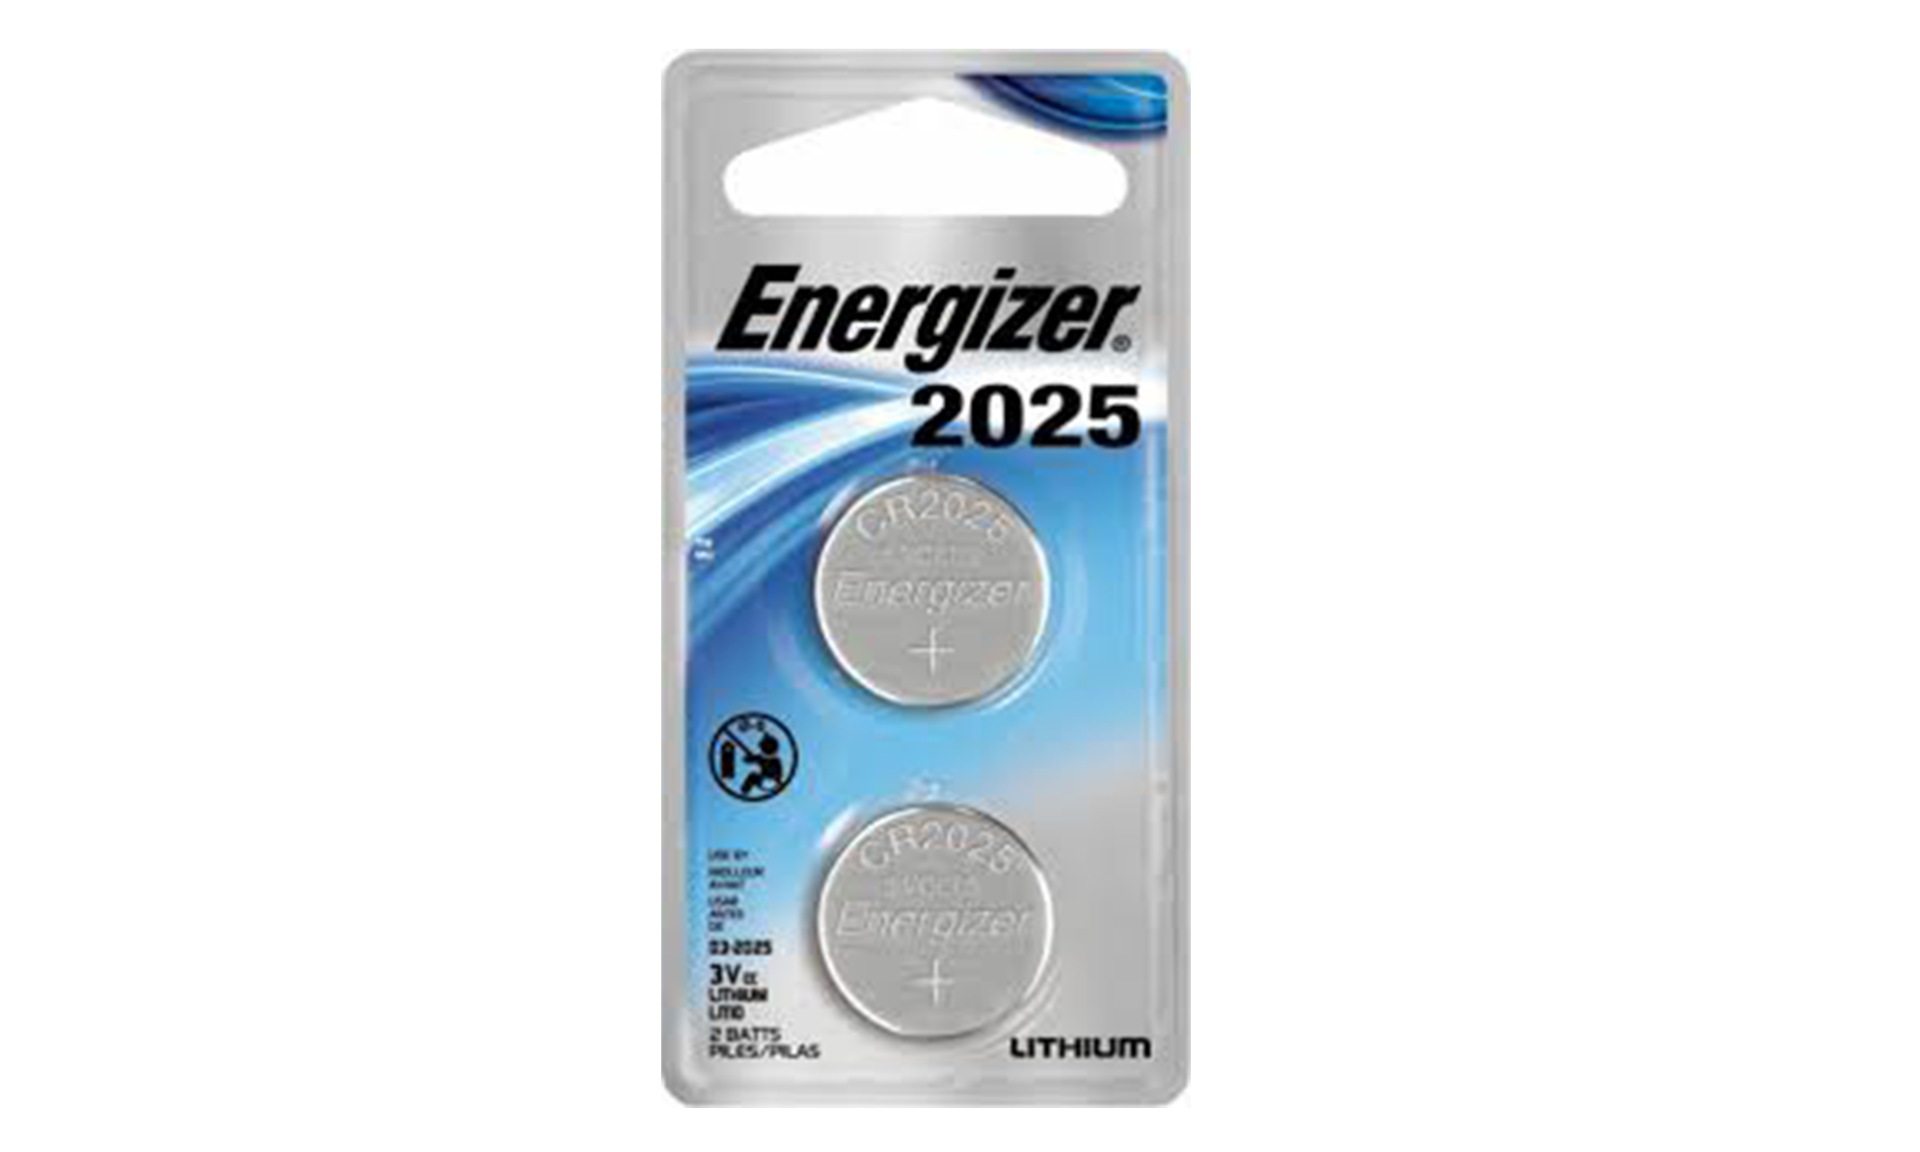 Energizer ECR2025 Battery 3V Lithium Coin Cell (2PC Blister Pack) (Child Resistant Packaging)